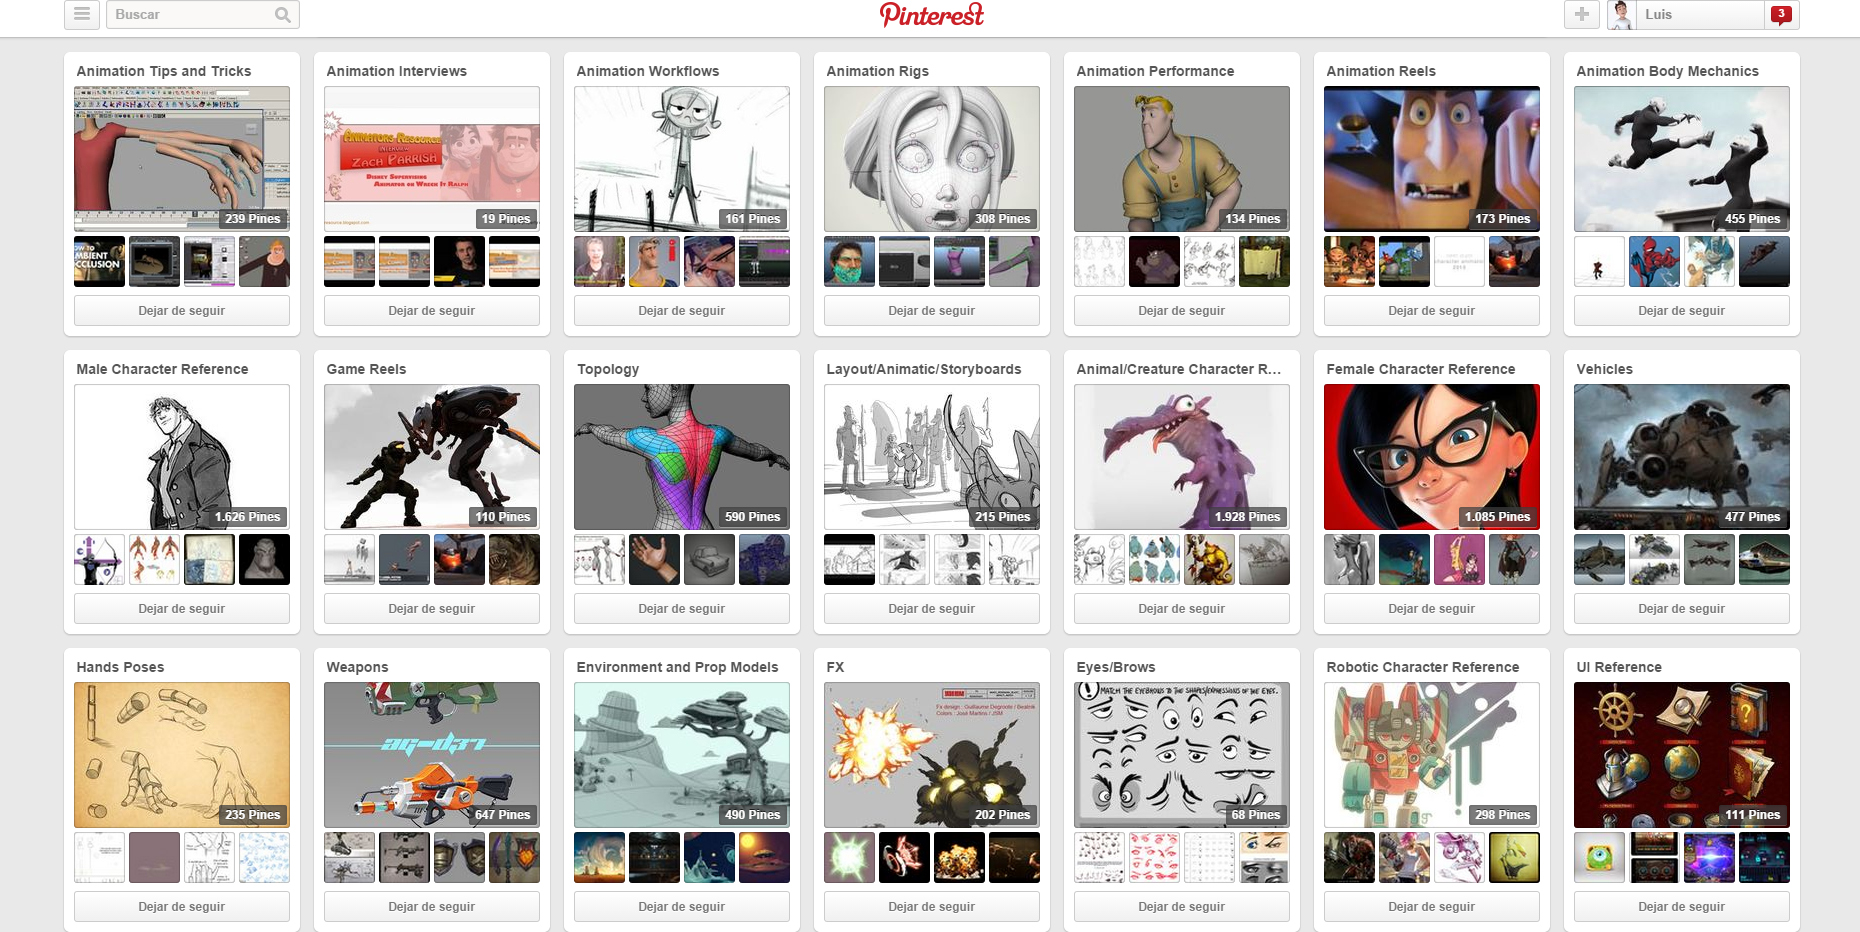 Animation Resource in Pinterest